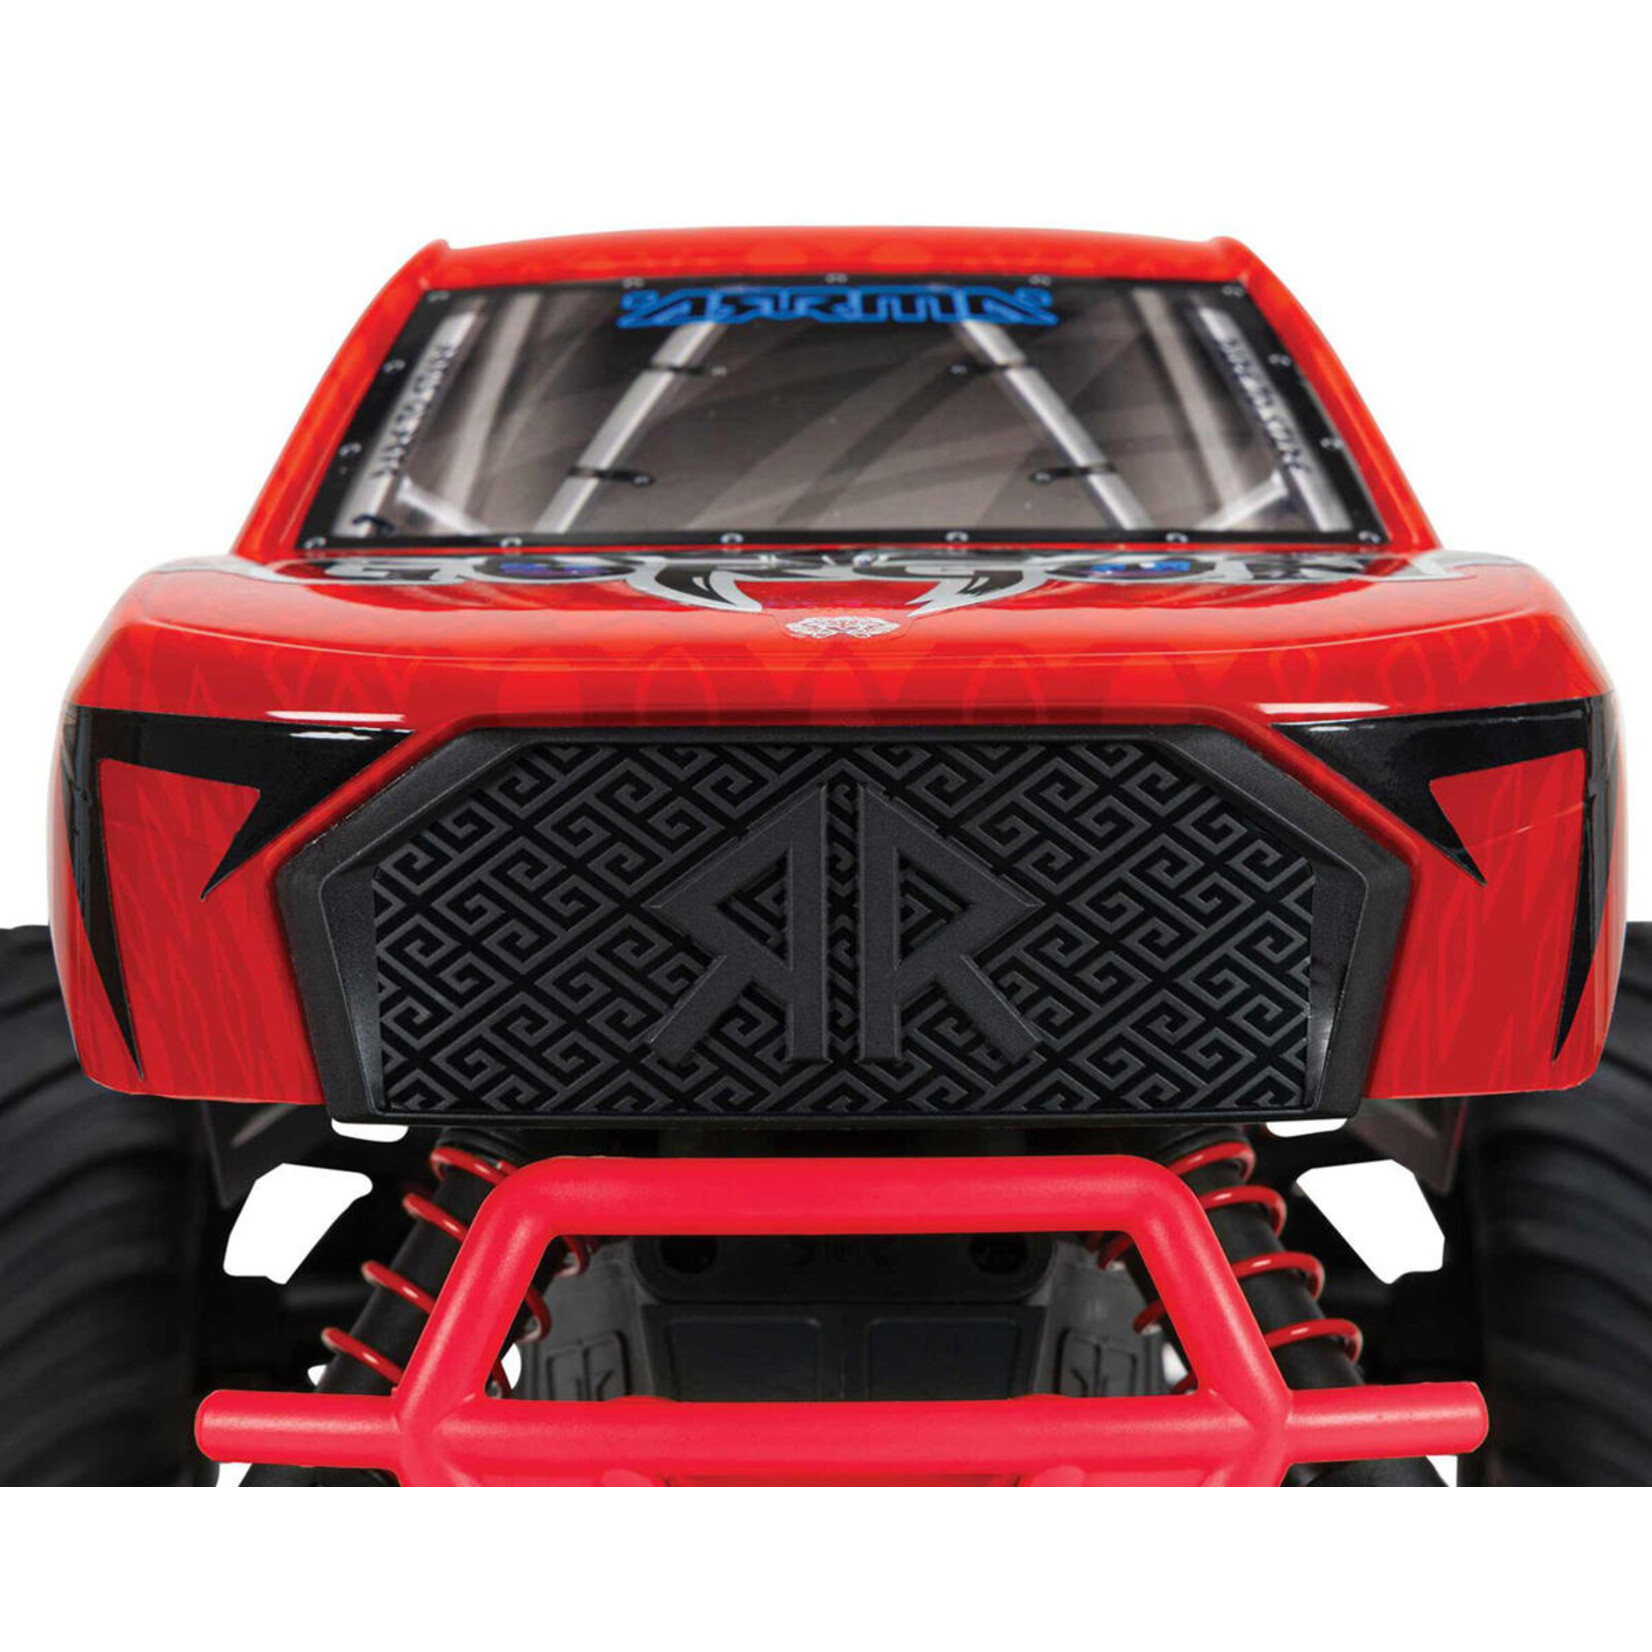 ARRMA Arrma Gorgon 4X2 MEGA 550 Brushed 1/10 Monster Truck RTR (Red) w/SLT2 2.4GHz Radio, Battery & Charger #ARA3230ST2